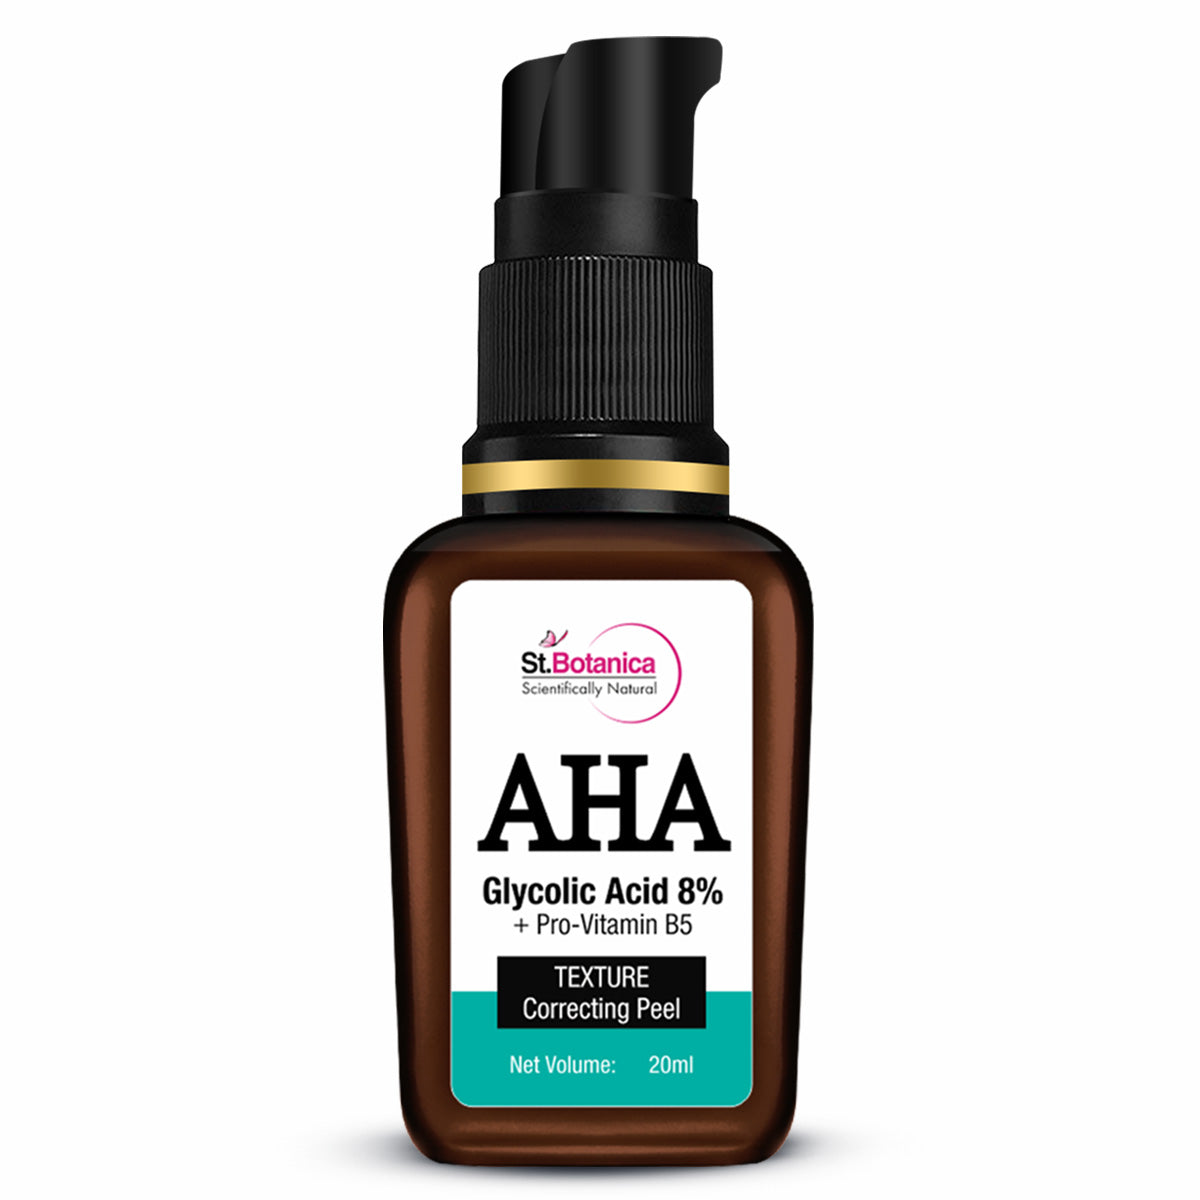 St.Botanica AHA Glycolic Acid 8% + Pro Vitamin B5 Texture Correcting Skin Peel (Face Serum), 20 ml